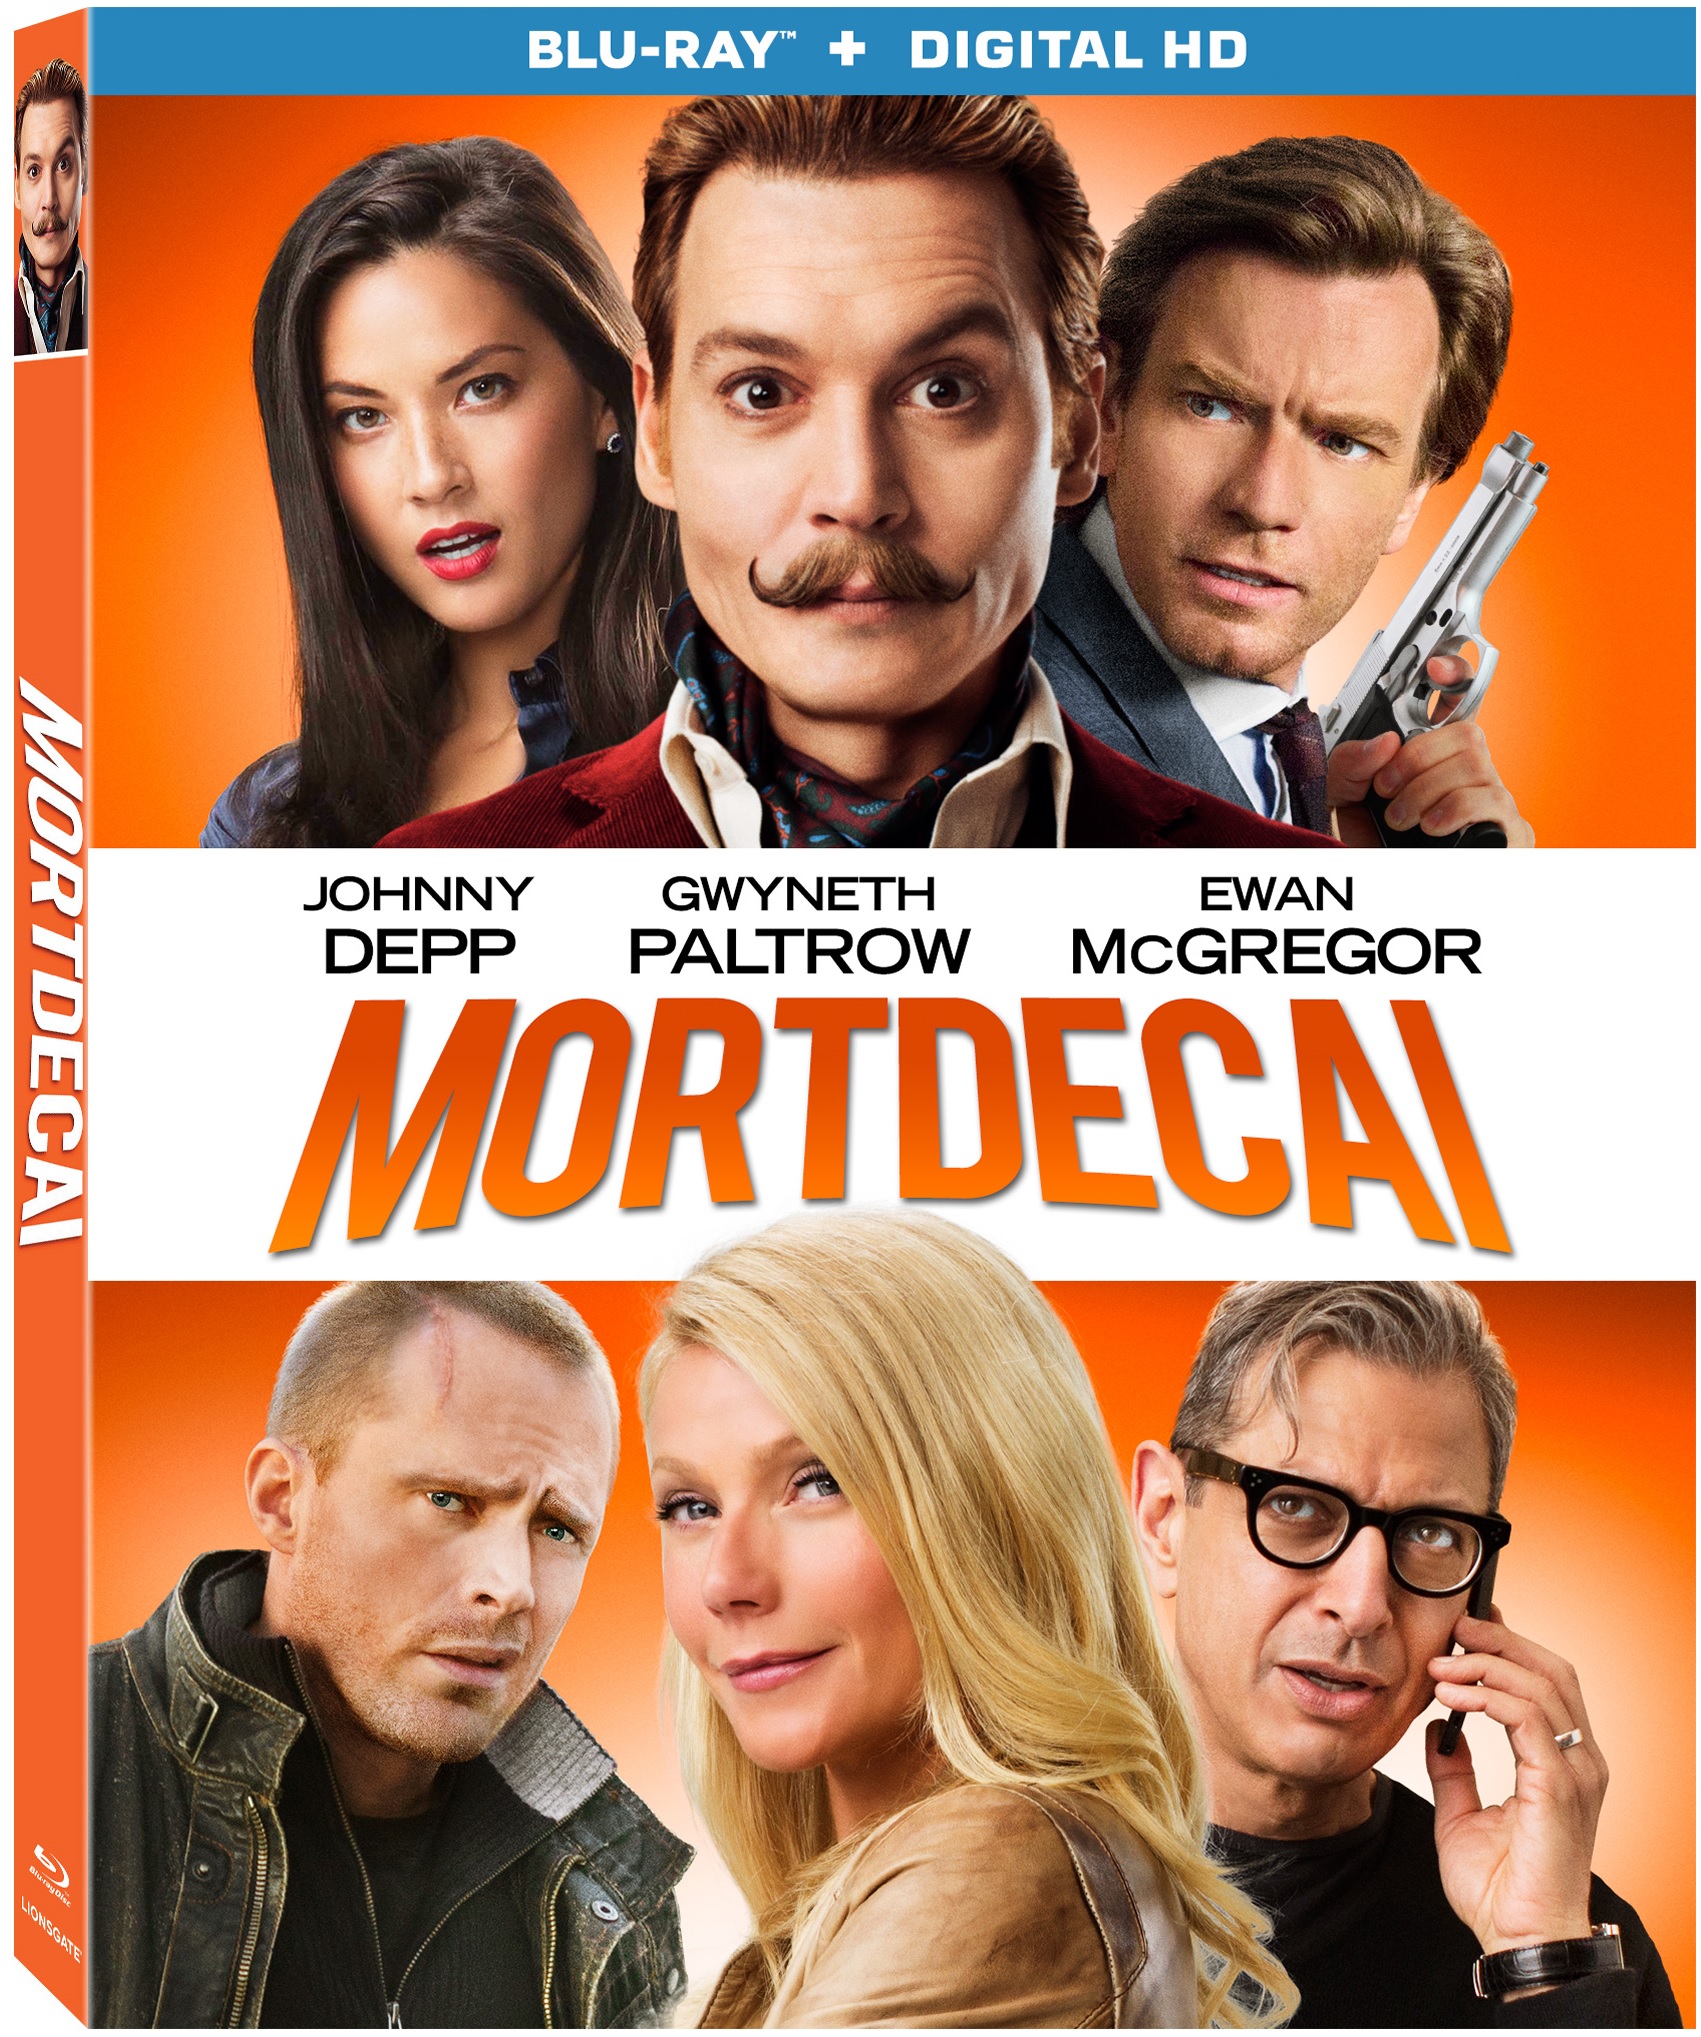 Mortdecai Blu-ray Review